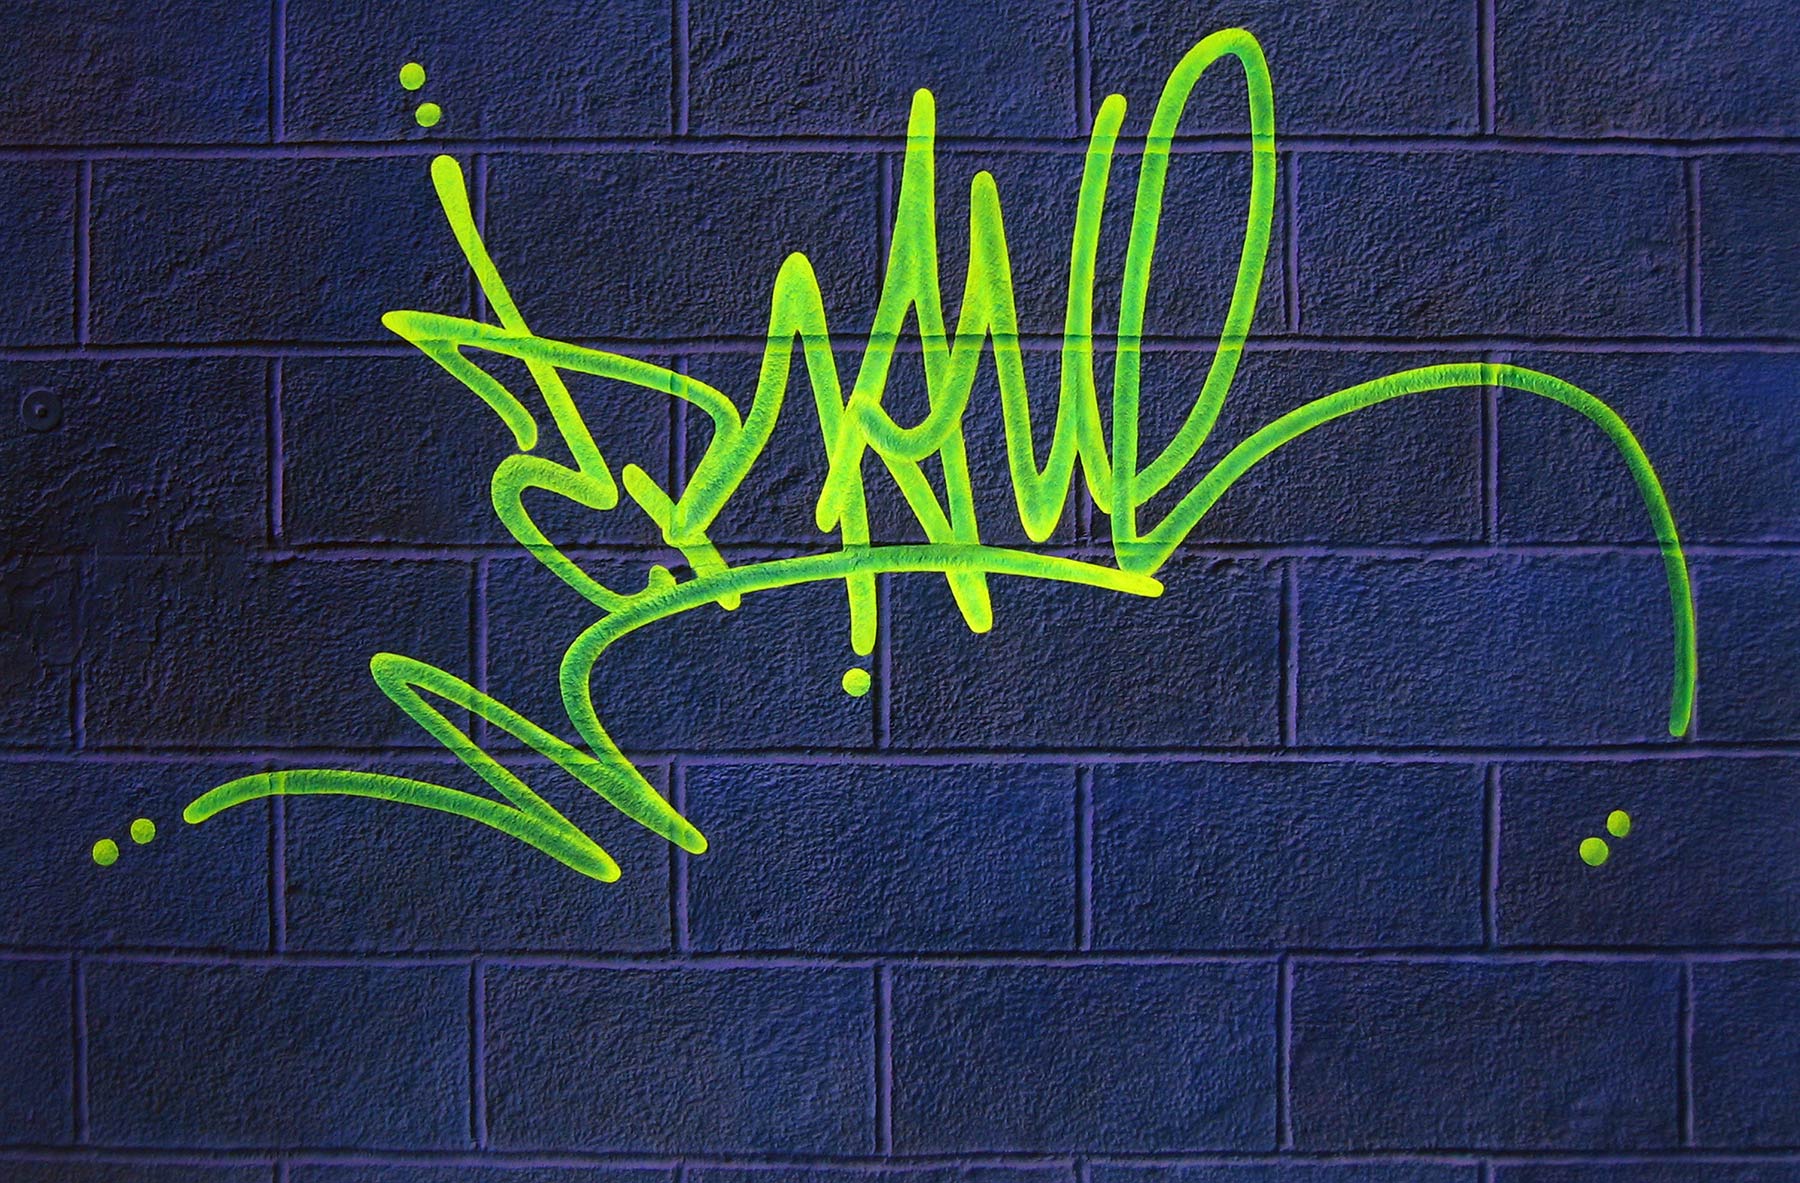 Nolan Haan neon graffiti tag